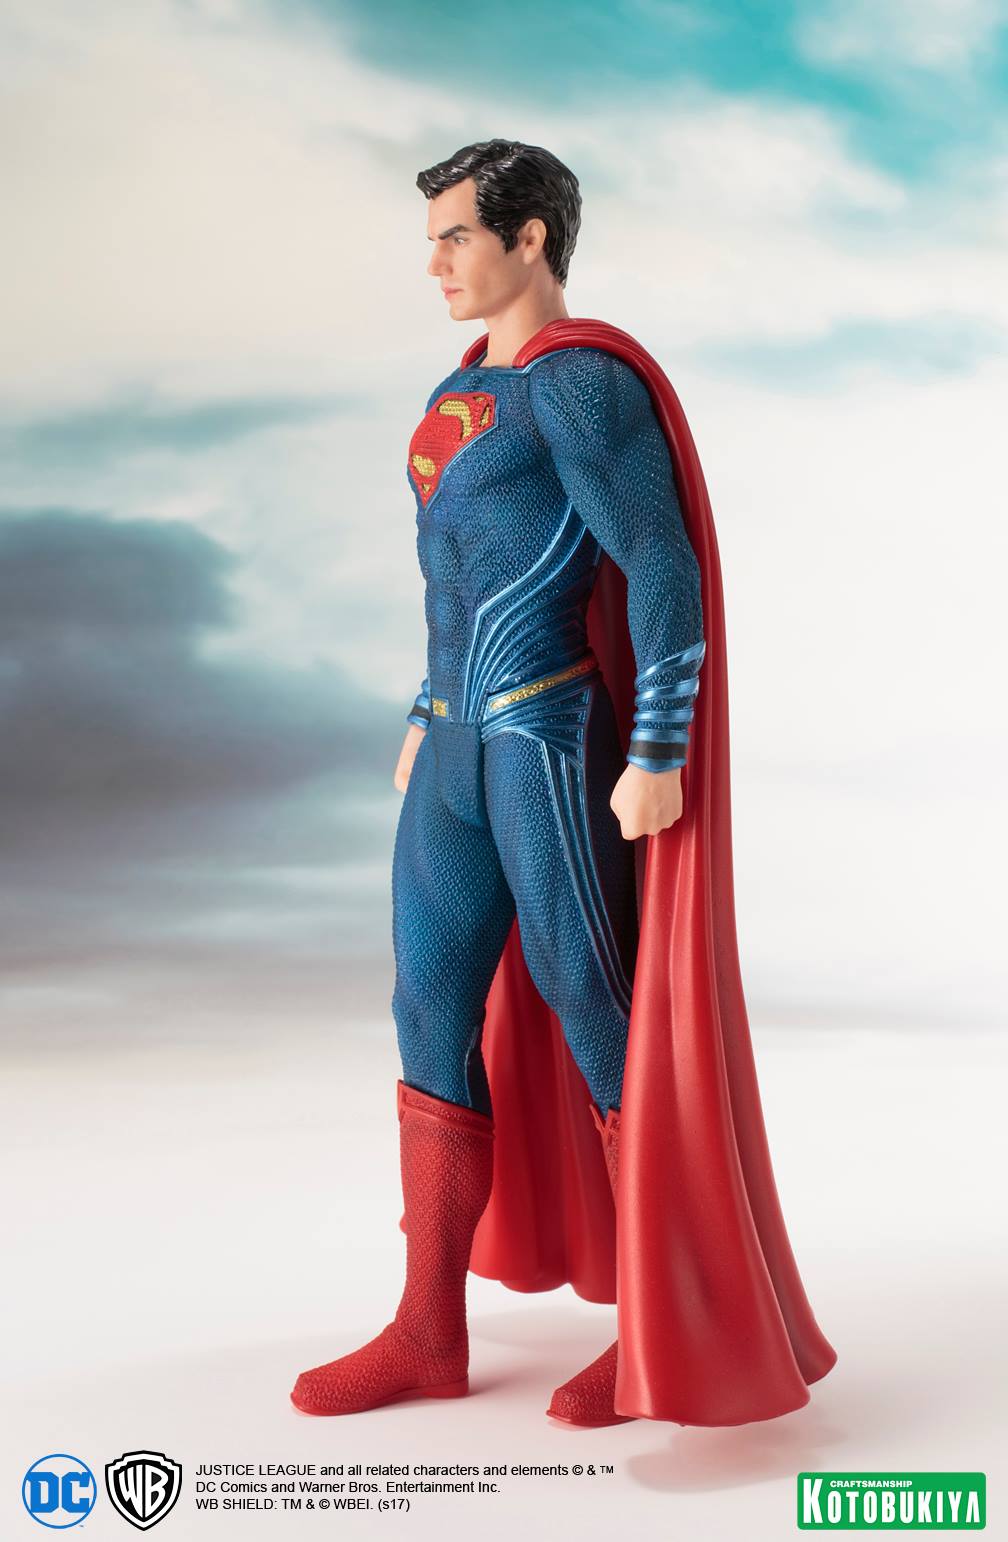 Kotobukiya DC Comics Justice League ARTFX+ Superman Statue - 0